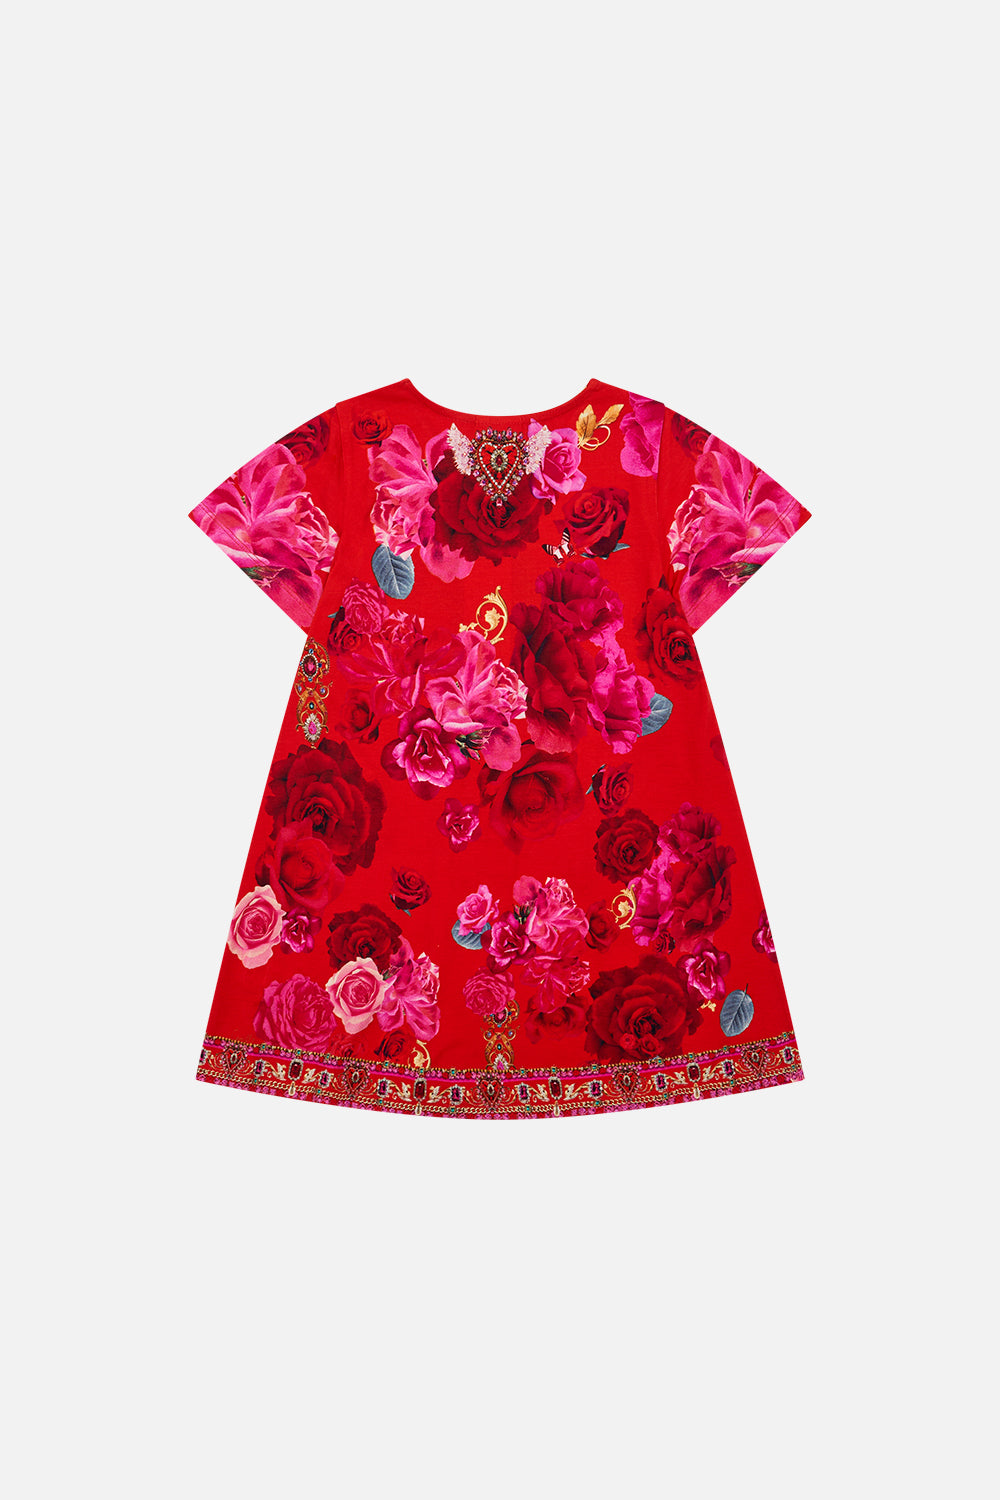 Milla By CAMILLA girls floral T shirt dress in An Italian Rosa print 